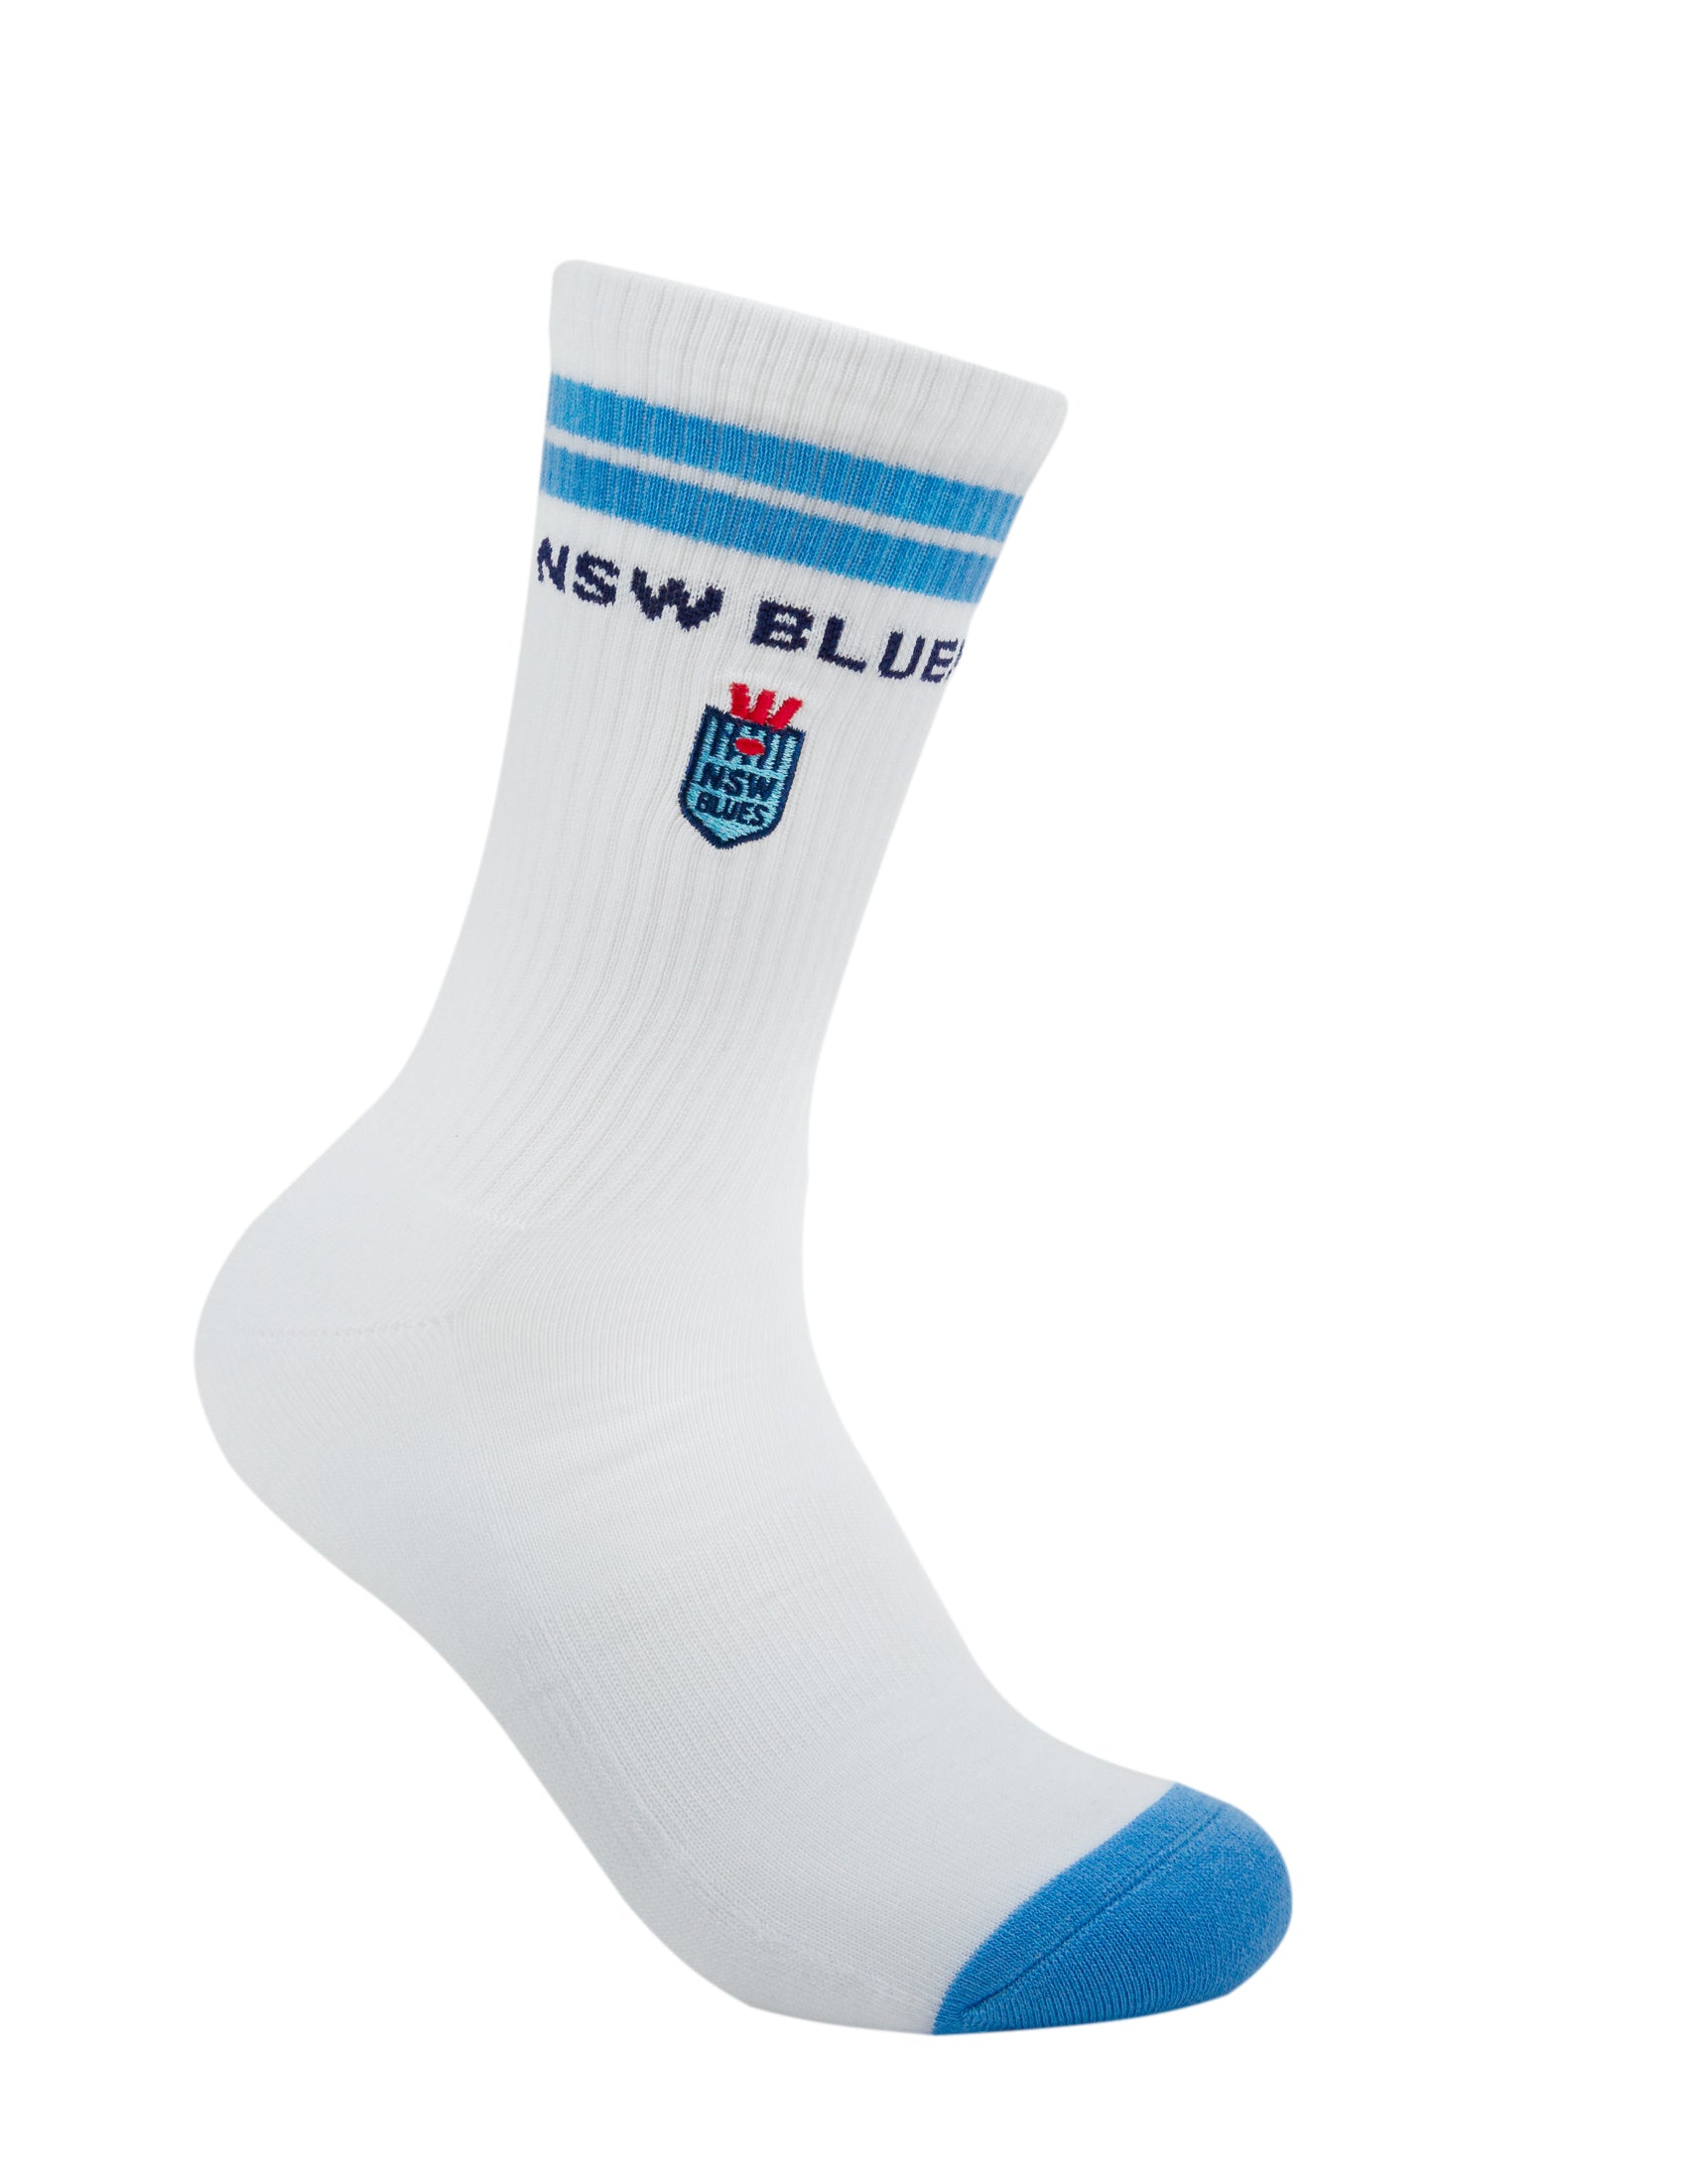 State of Origin New South Wales Blues Sneaker Sock 2 Pack